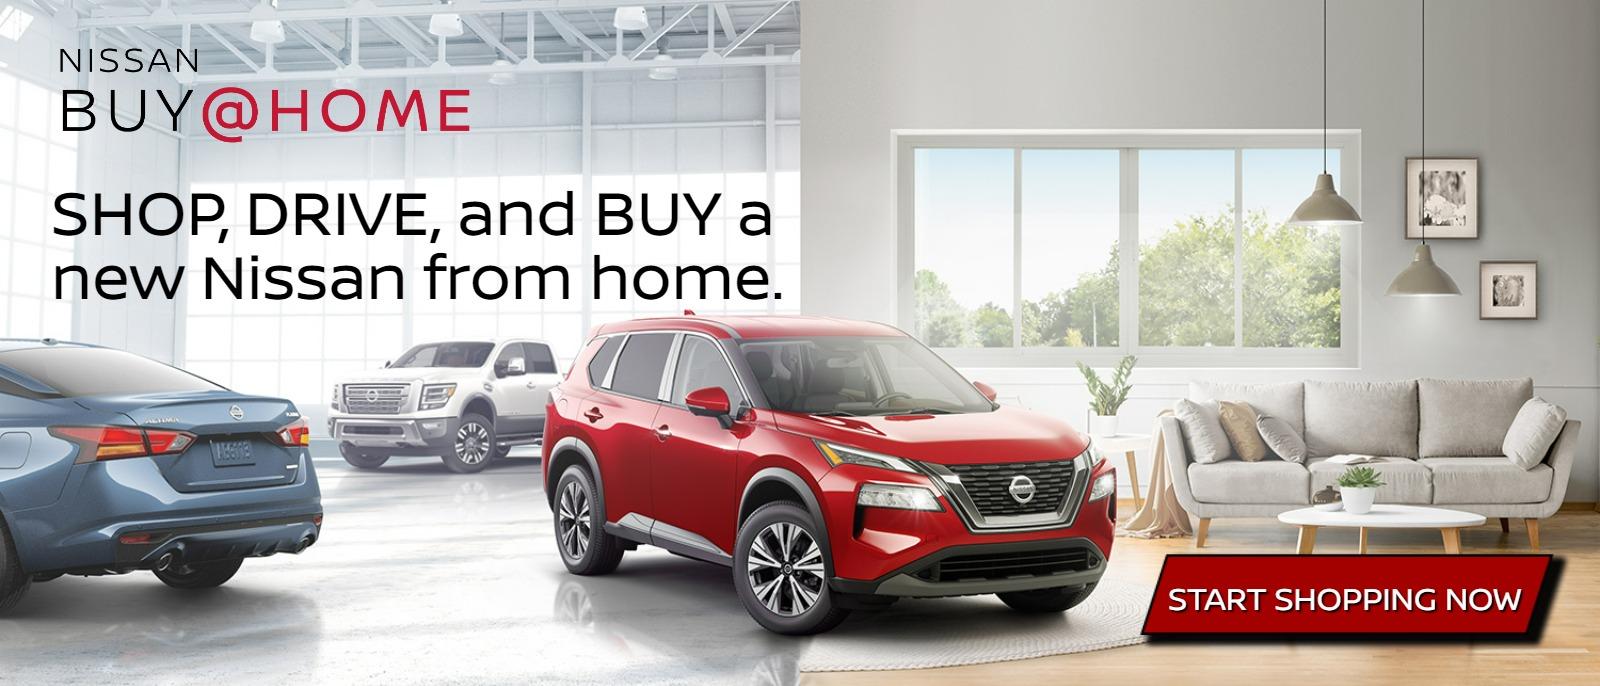 Nissan Buy@Home